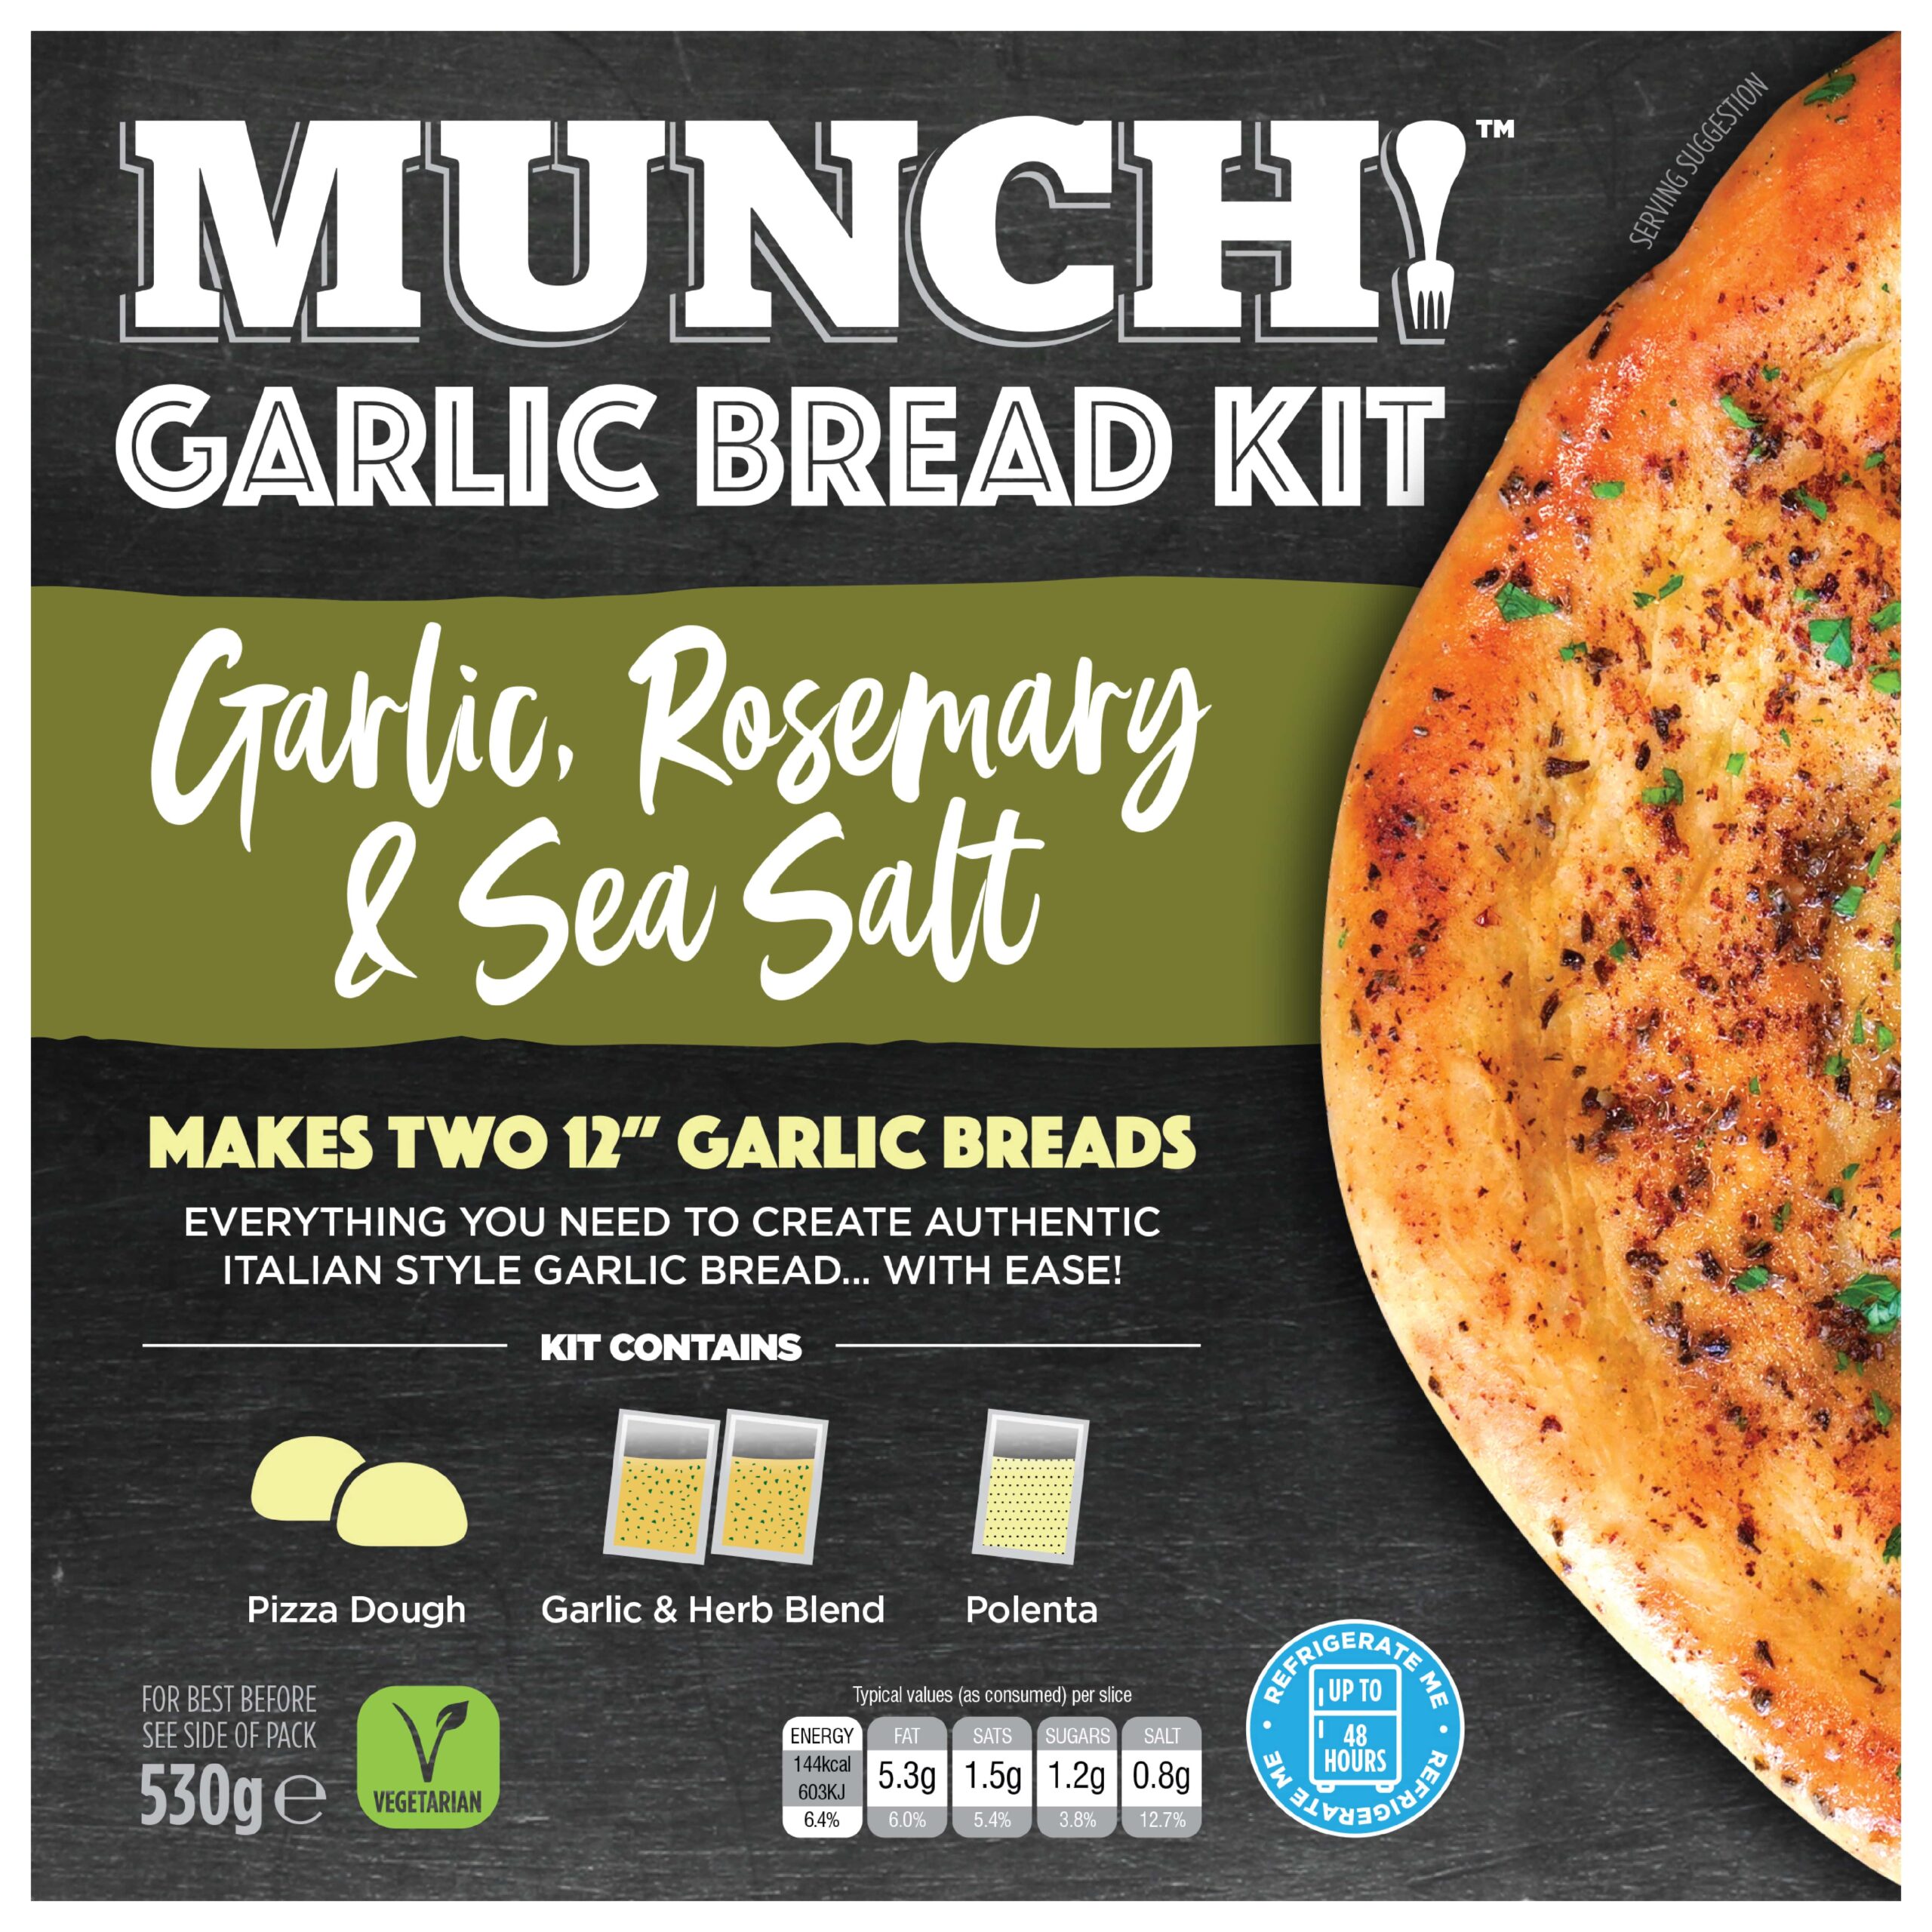 Munch Garlic Bread